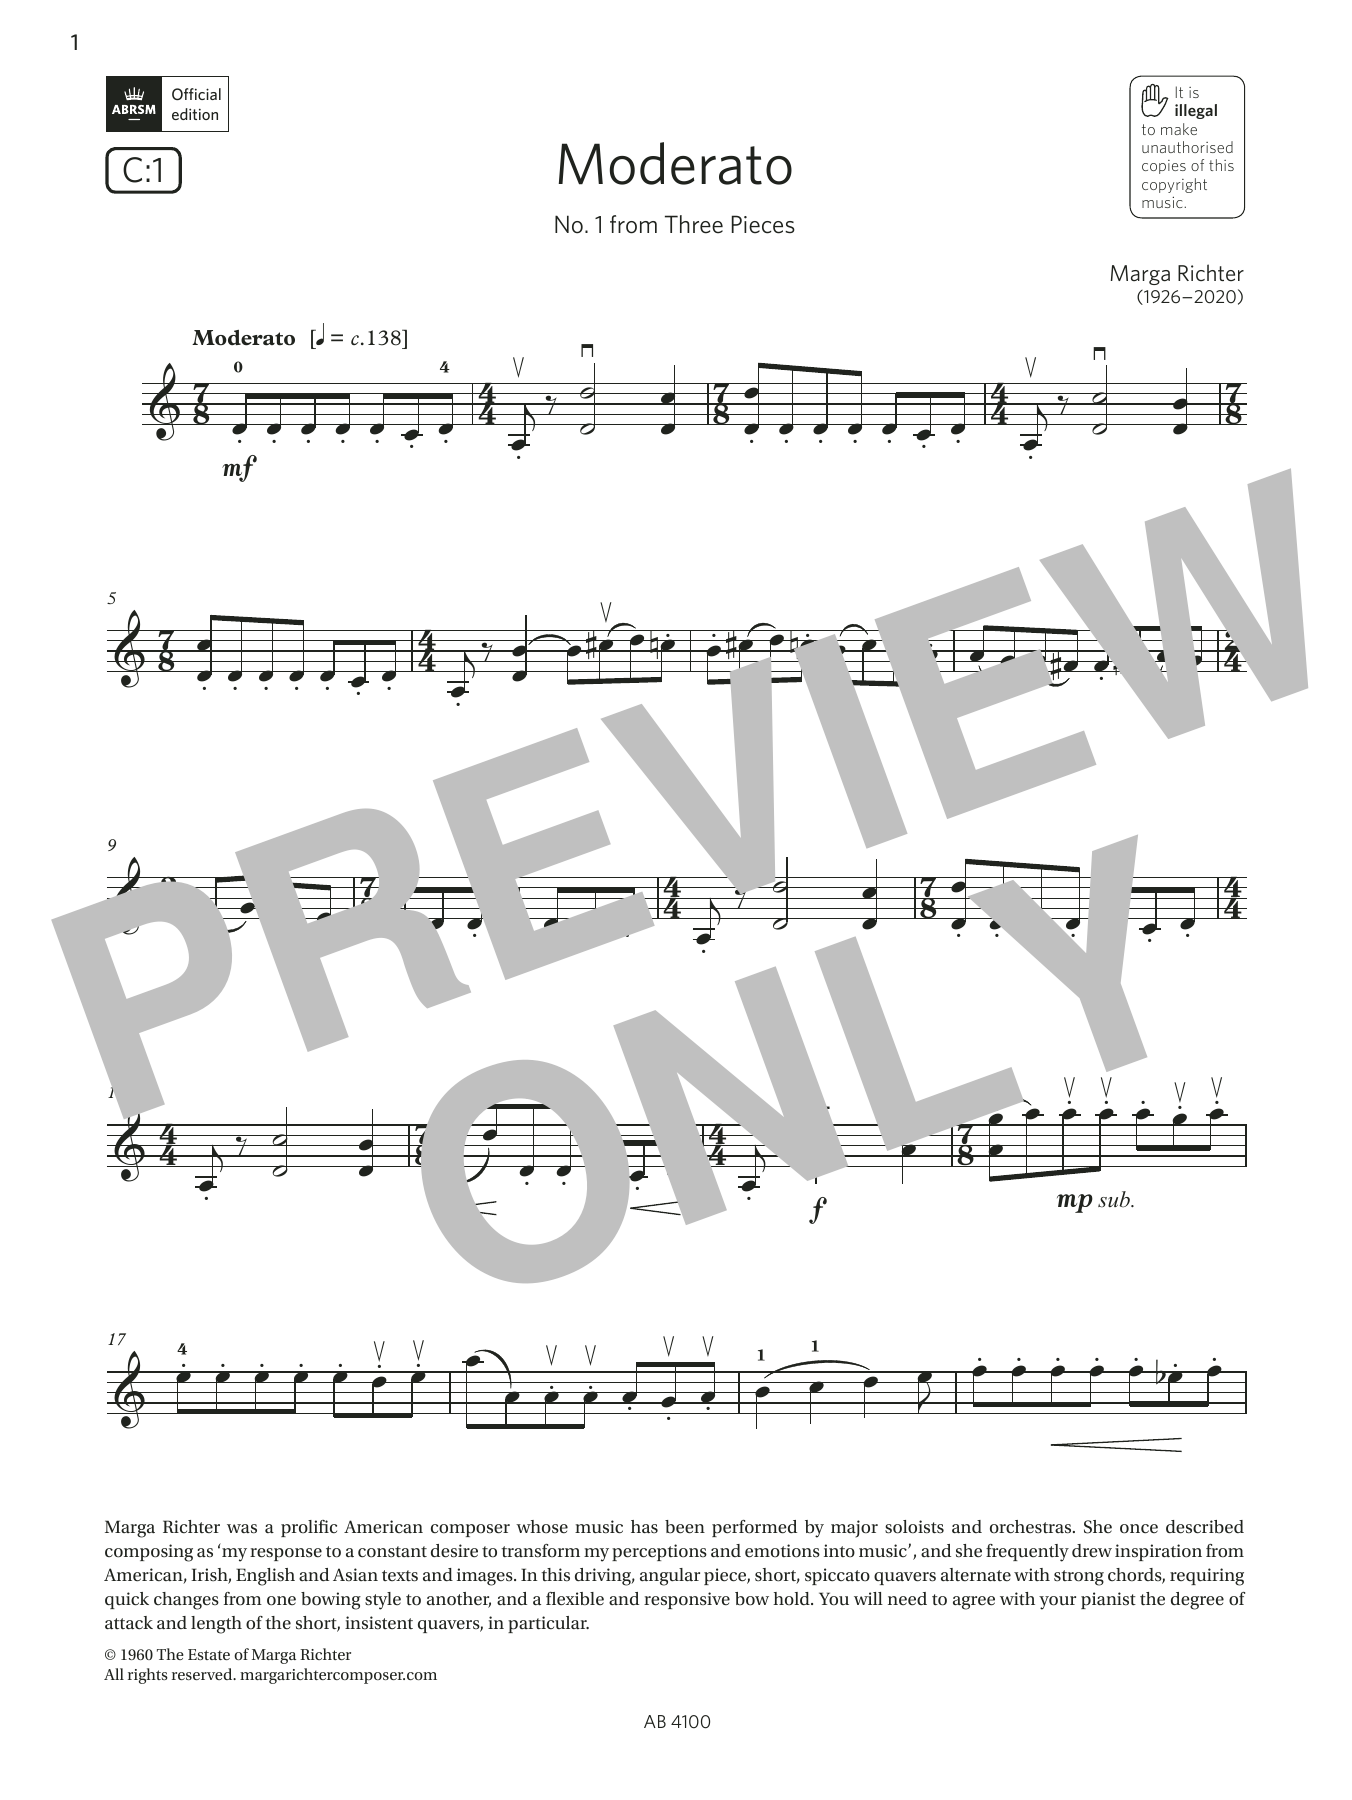 Download Marga Richter Moderato (Grade 6, C1, from the ABRSM V Sheet Music